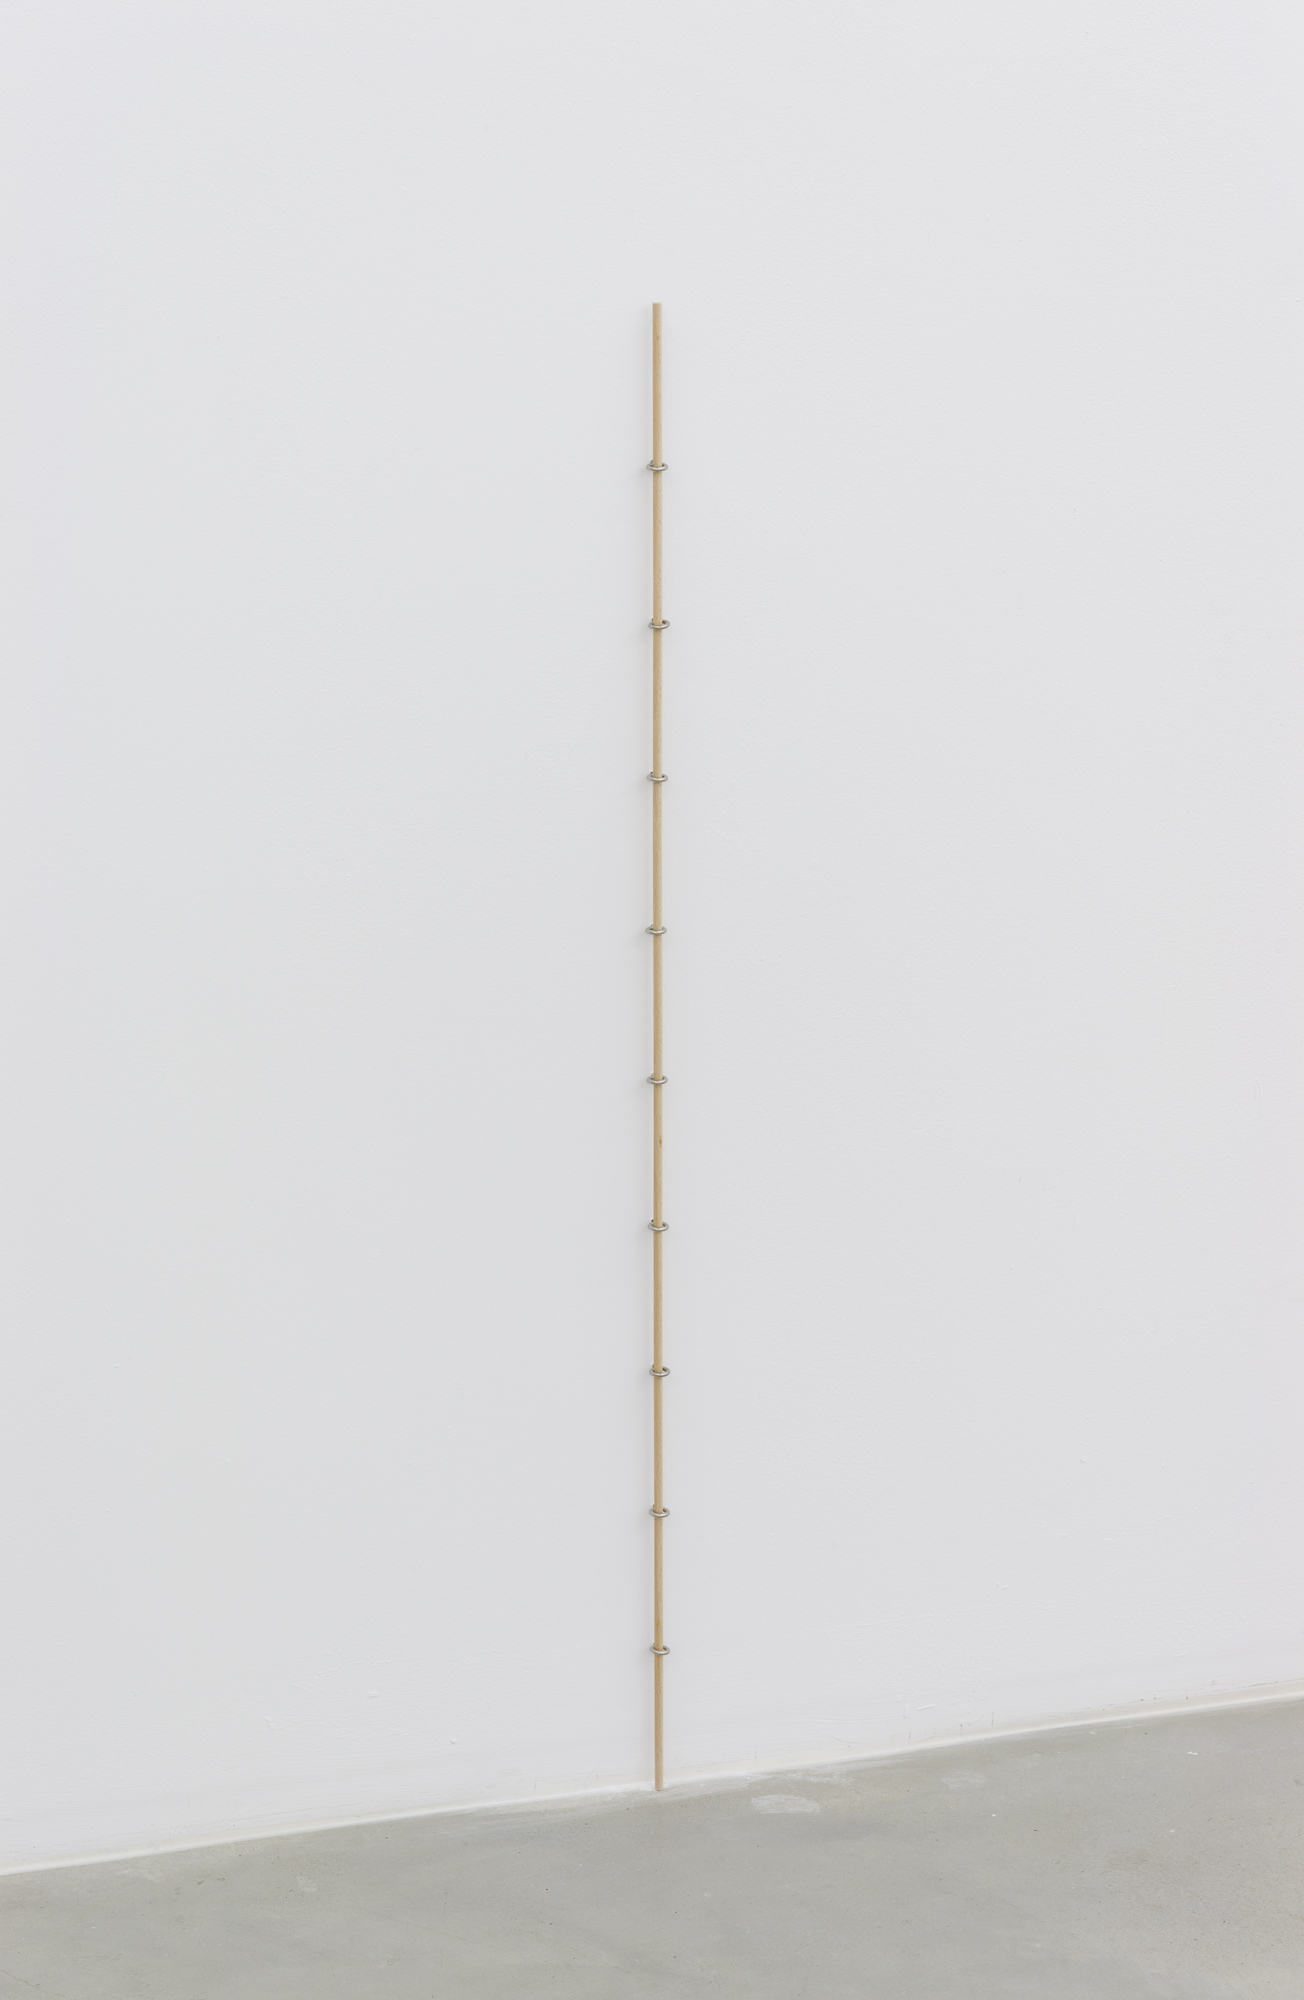 10 cm, wooden rod, screw hooks, 100 cm x 1.5, 2015